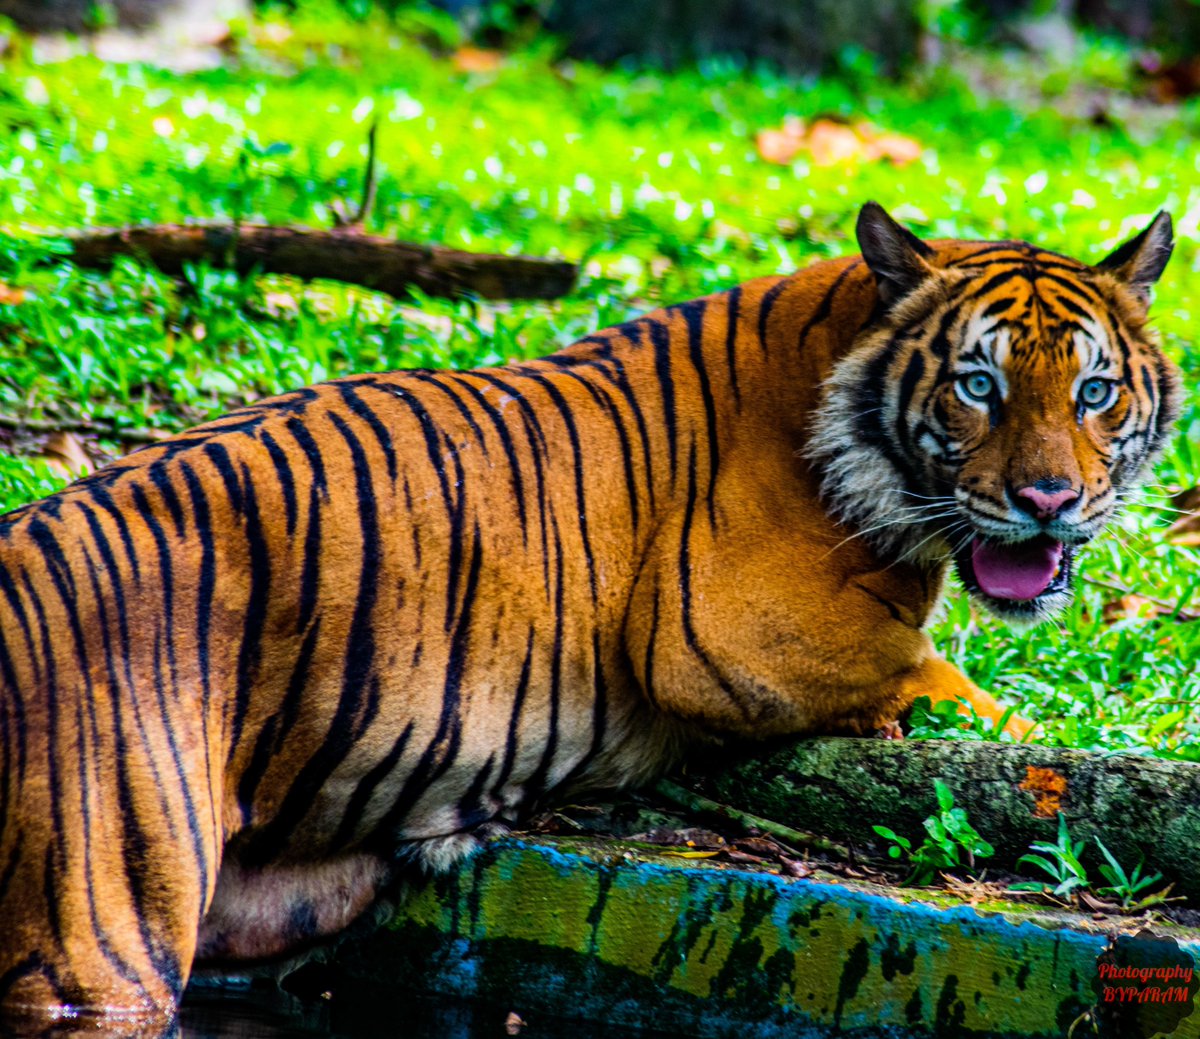 🐯 #tiger #wildlife #animals #nature #tigers #art #love #lion #cat #photography #wildlifephotography #bigcats #animal #herex #tigertattoo #tattoo #cats #wild #india #tigerking #bigcat  #naturephotography #zoo #tigre  #photographybyparam